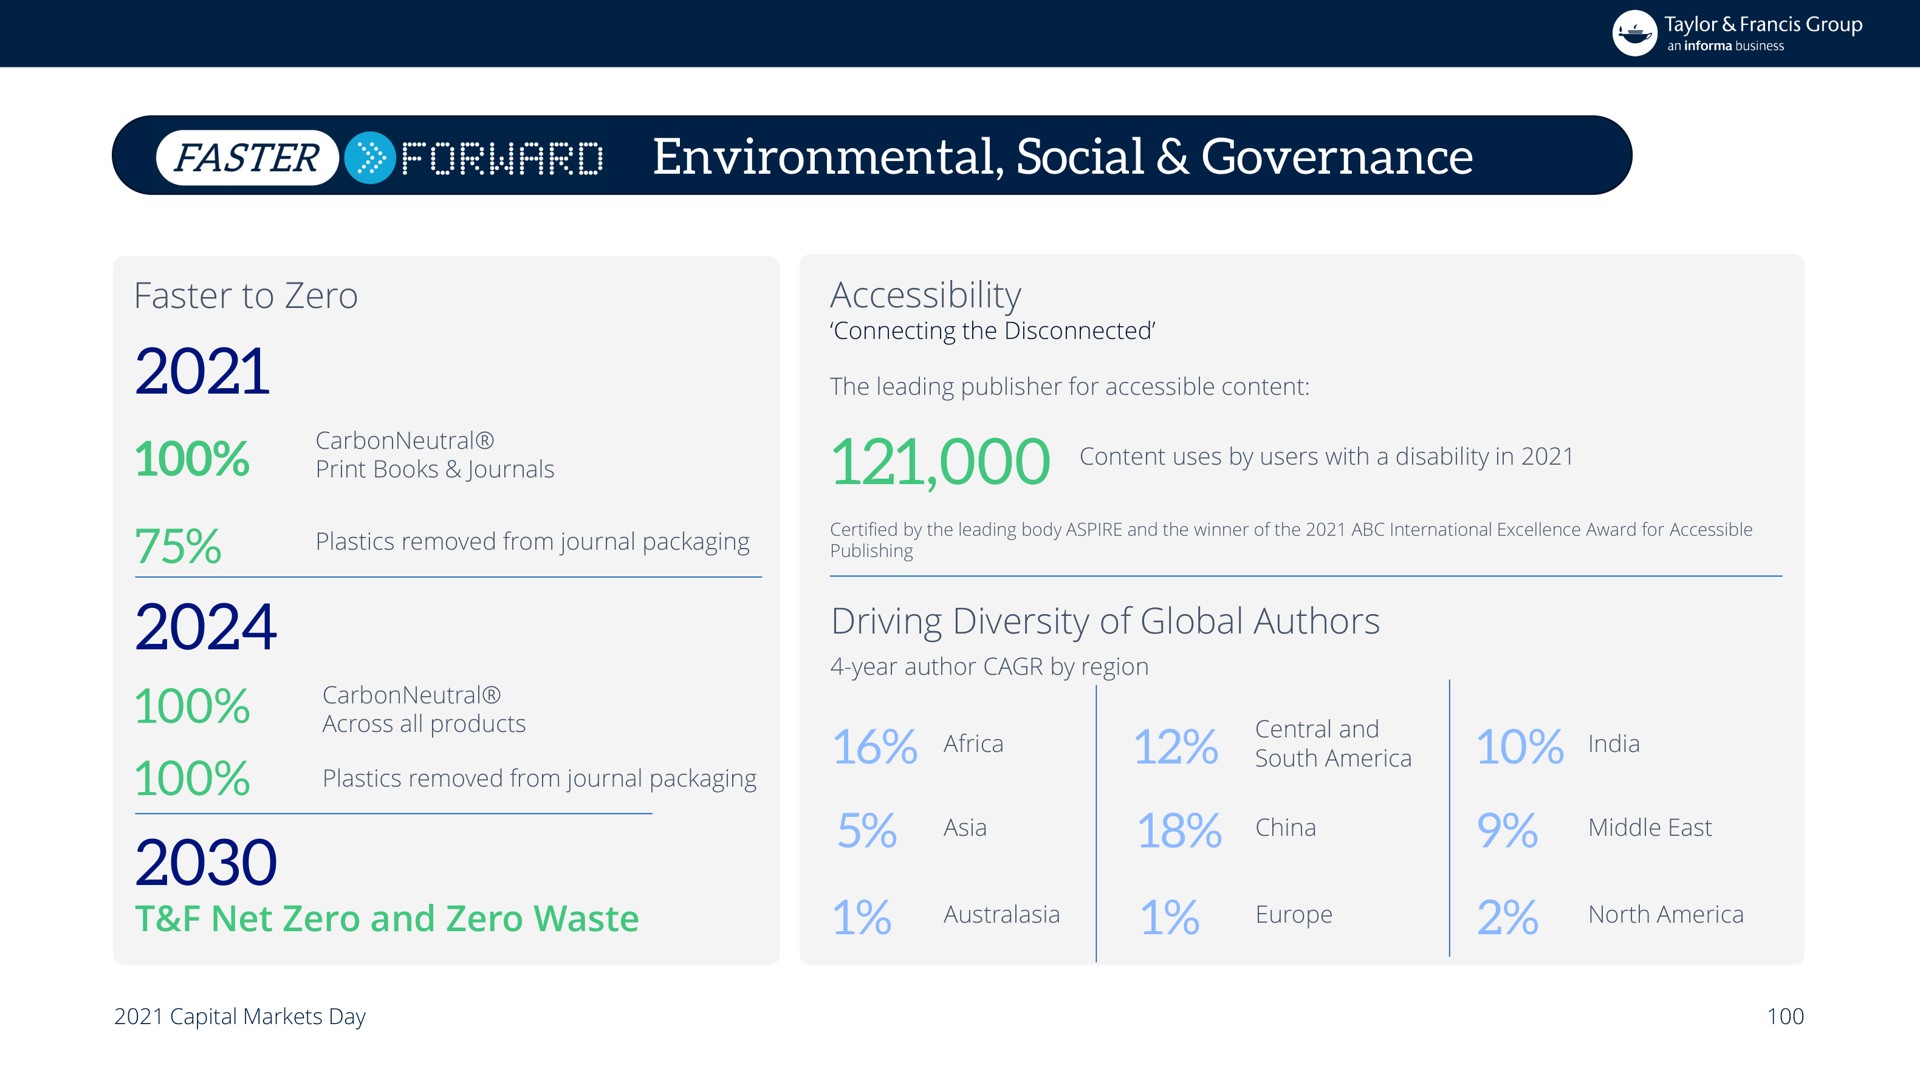 faster environmental social governance driving diversity of global authors | Informa